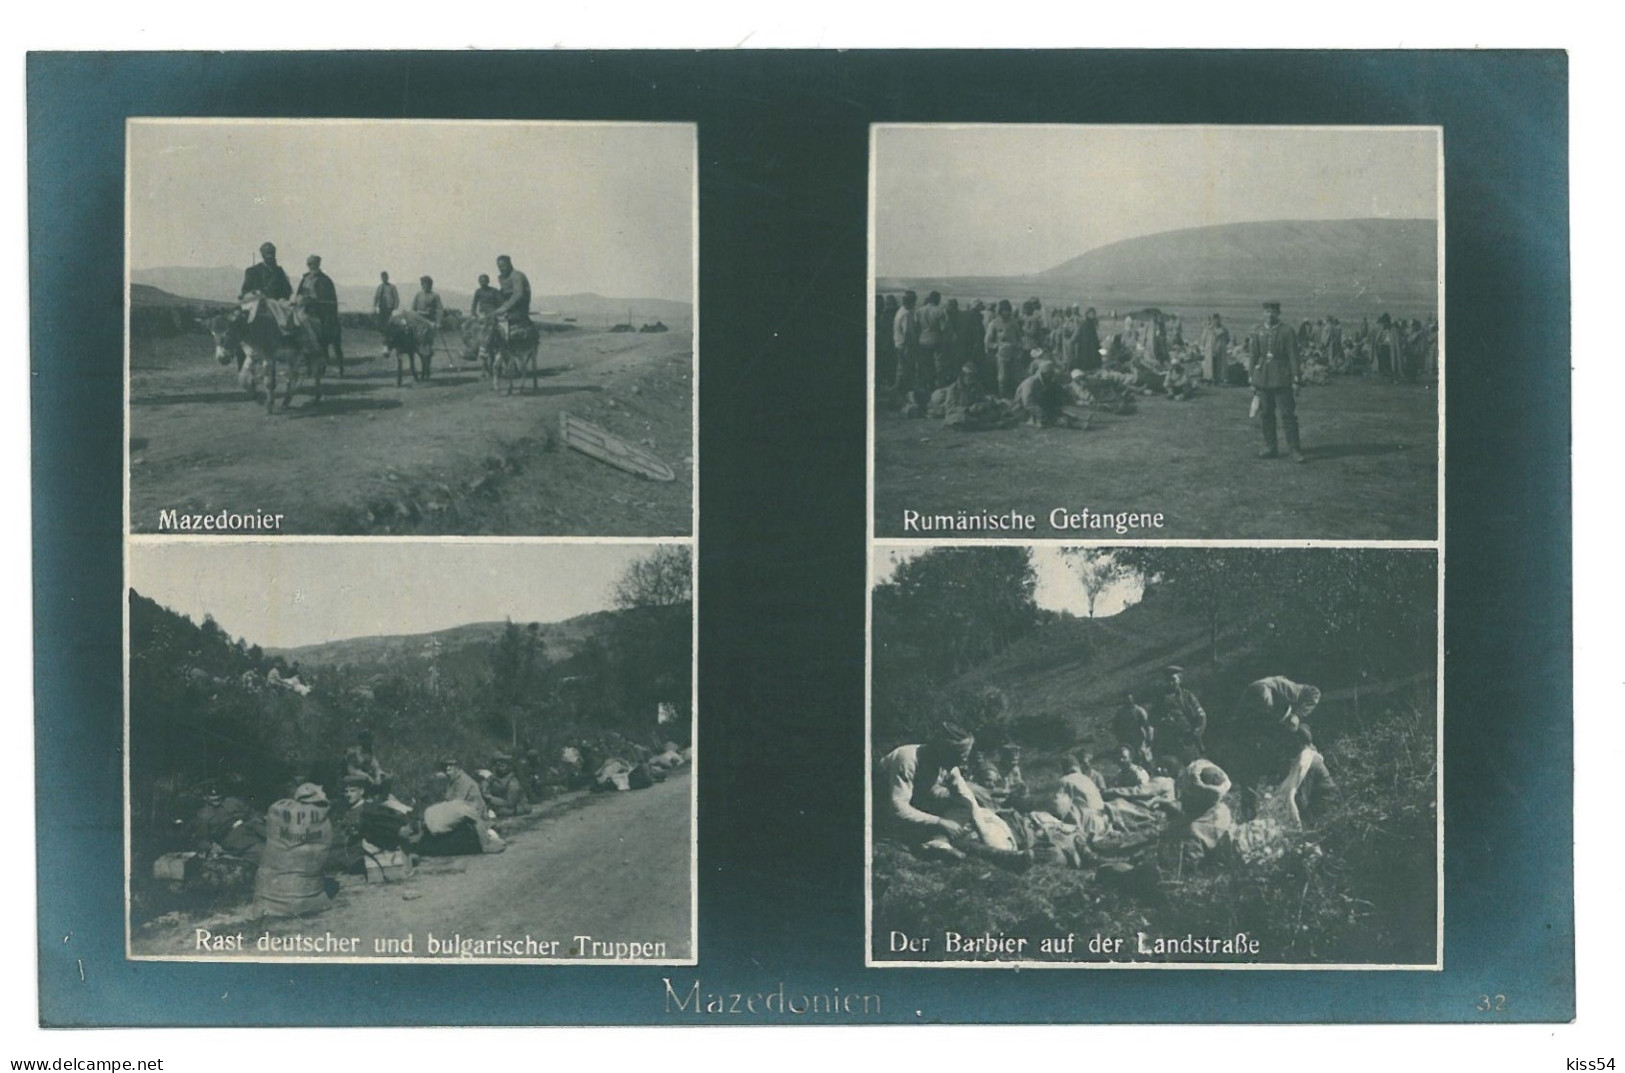 RO 36 - 20333 ROMANIAN Prisoners, Bulgarians, Macedonians - Old Postcard, Real PHOTO - Unused - Romania